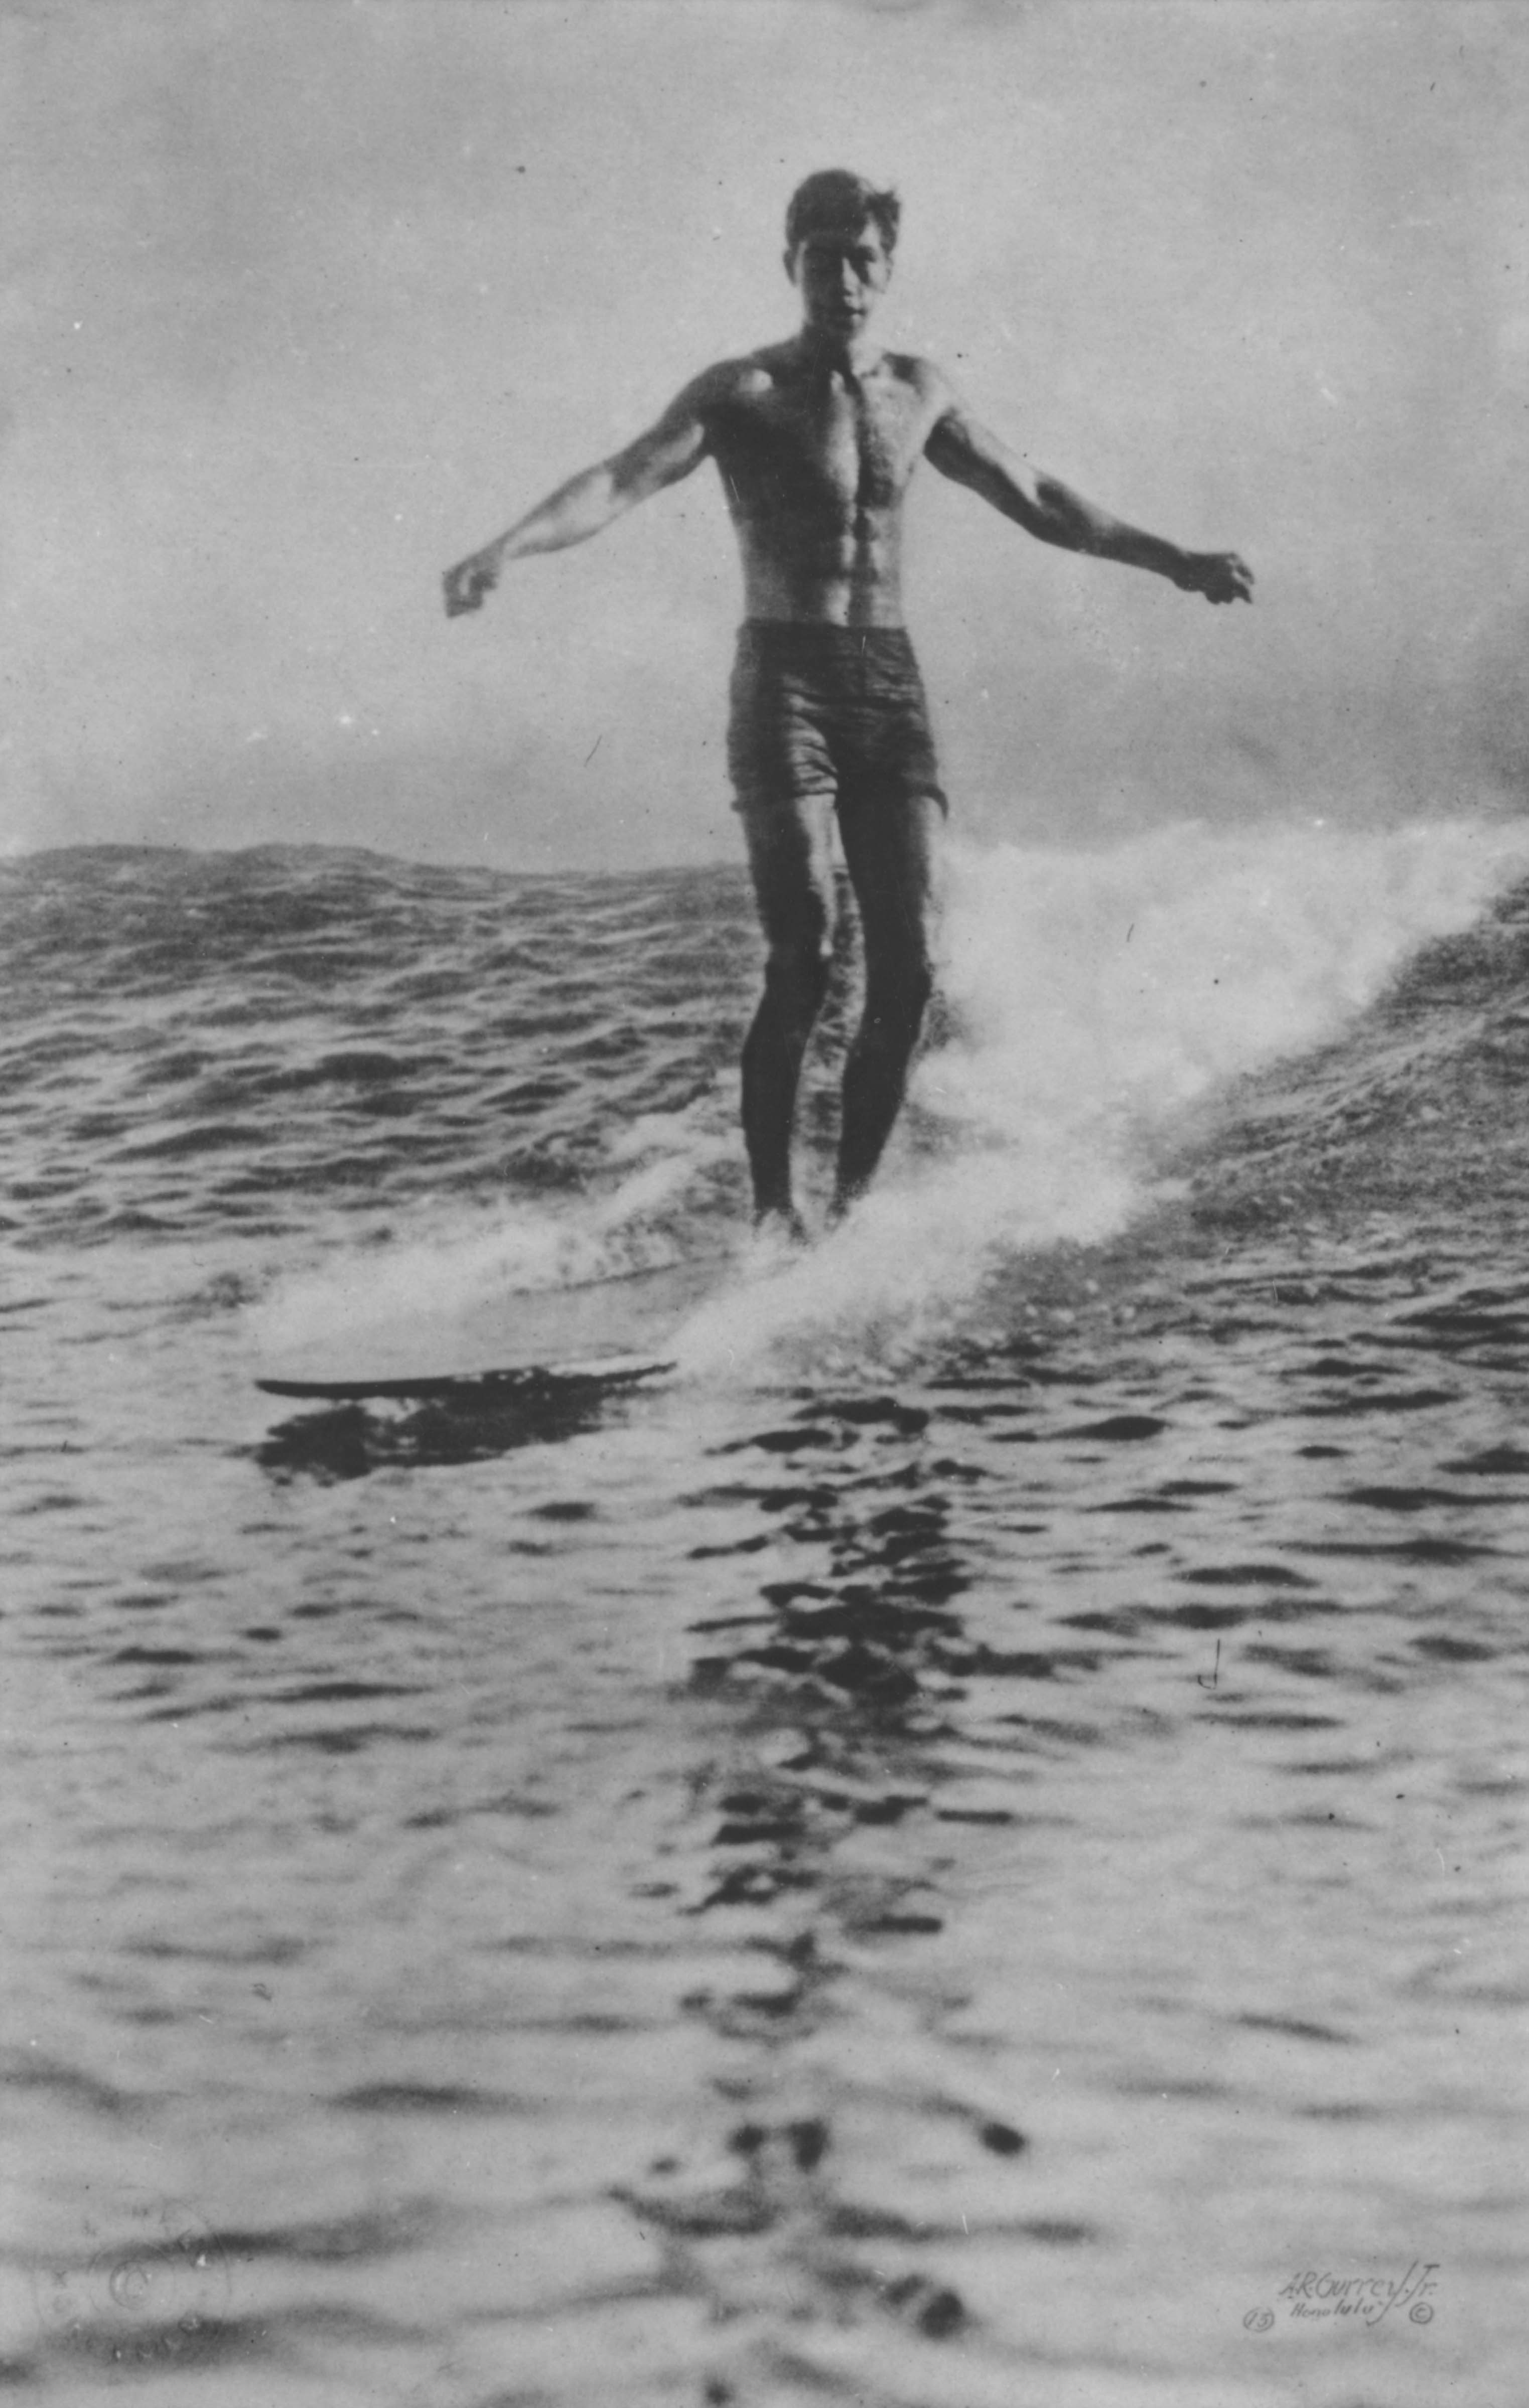 [Duke Kahanamoku surfing] Hawaiʻi, ca. 1910. Photo by Alfred R. Gurrey Jr.